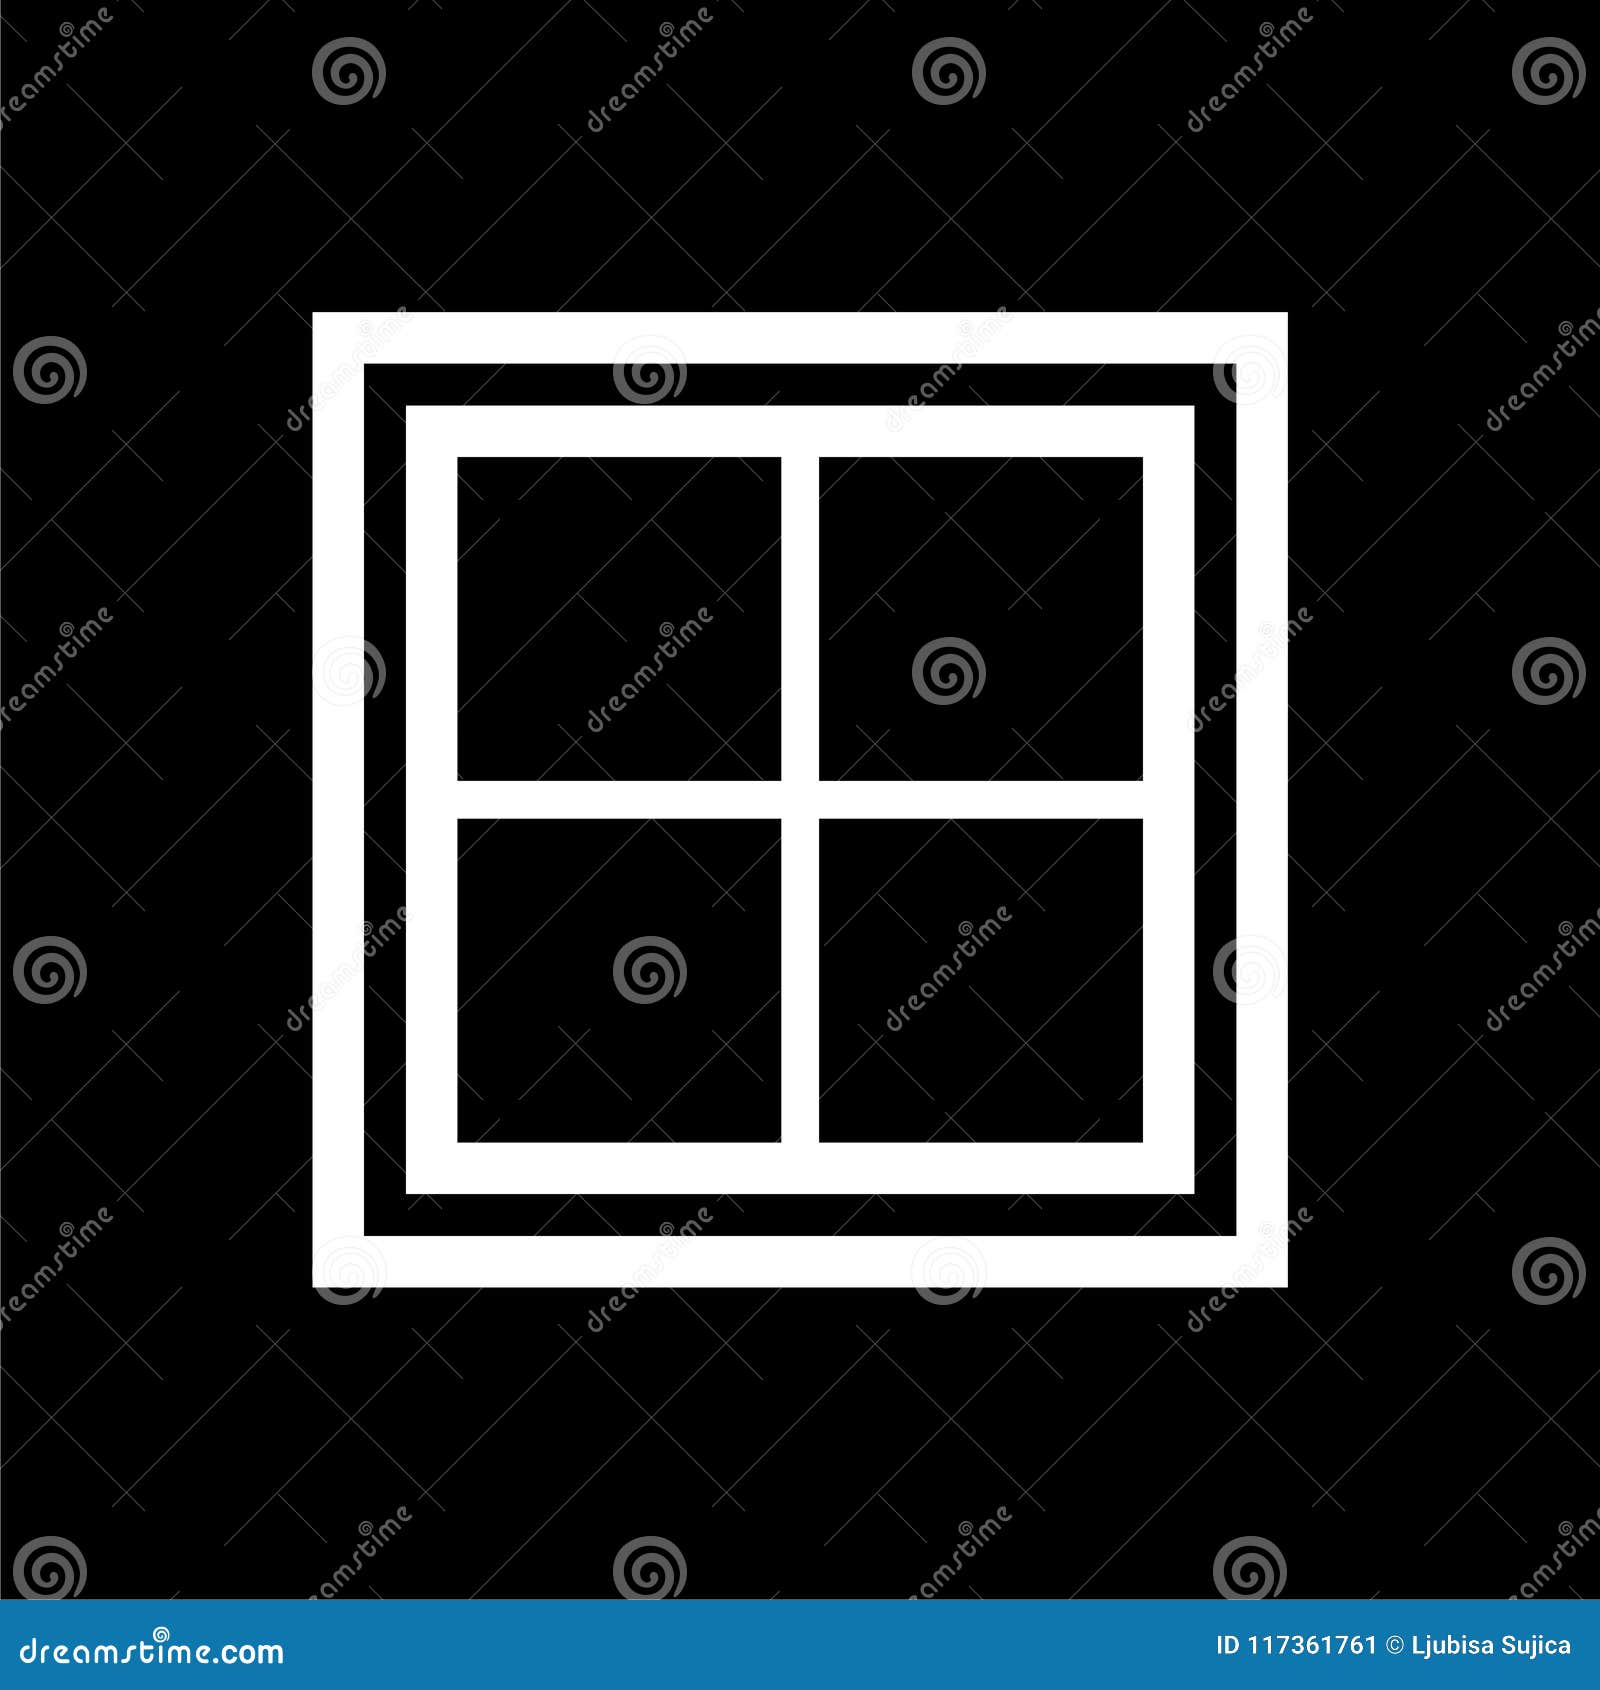 Window Squeege Icon Graphic by marco.livolsi2014 · Creative Fabrica